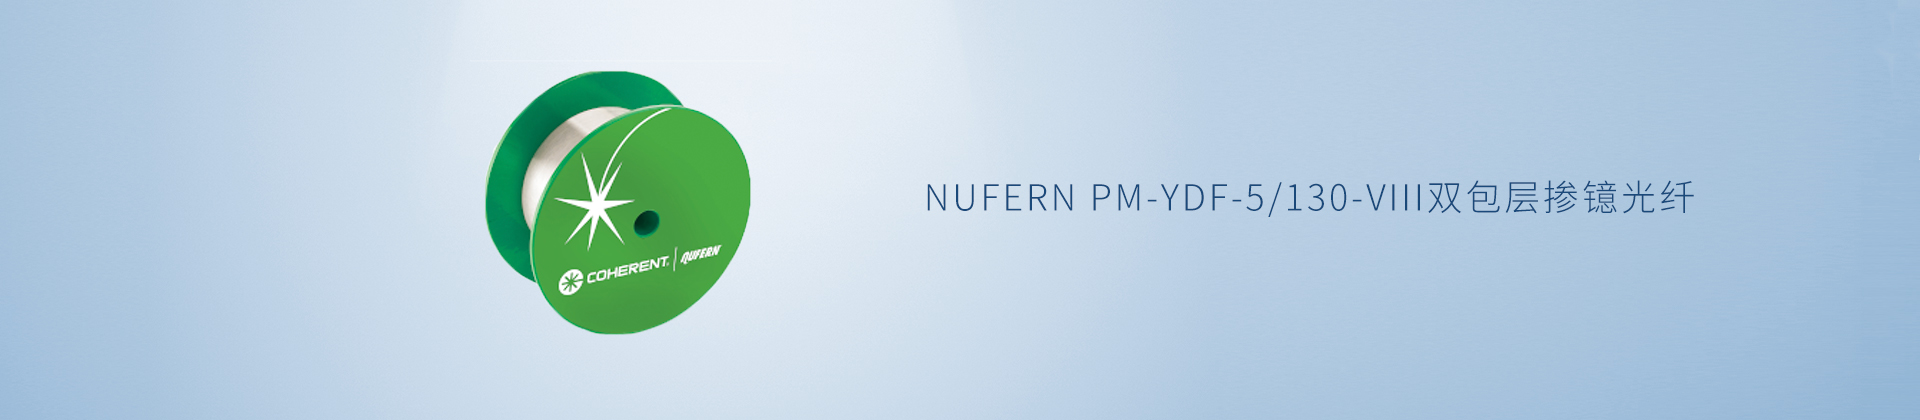 NUFERN PM-YDF-5/130-VIII双包层掺镱光纤